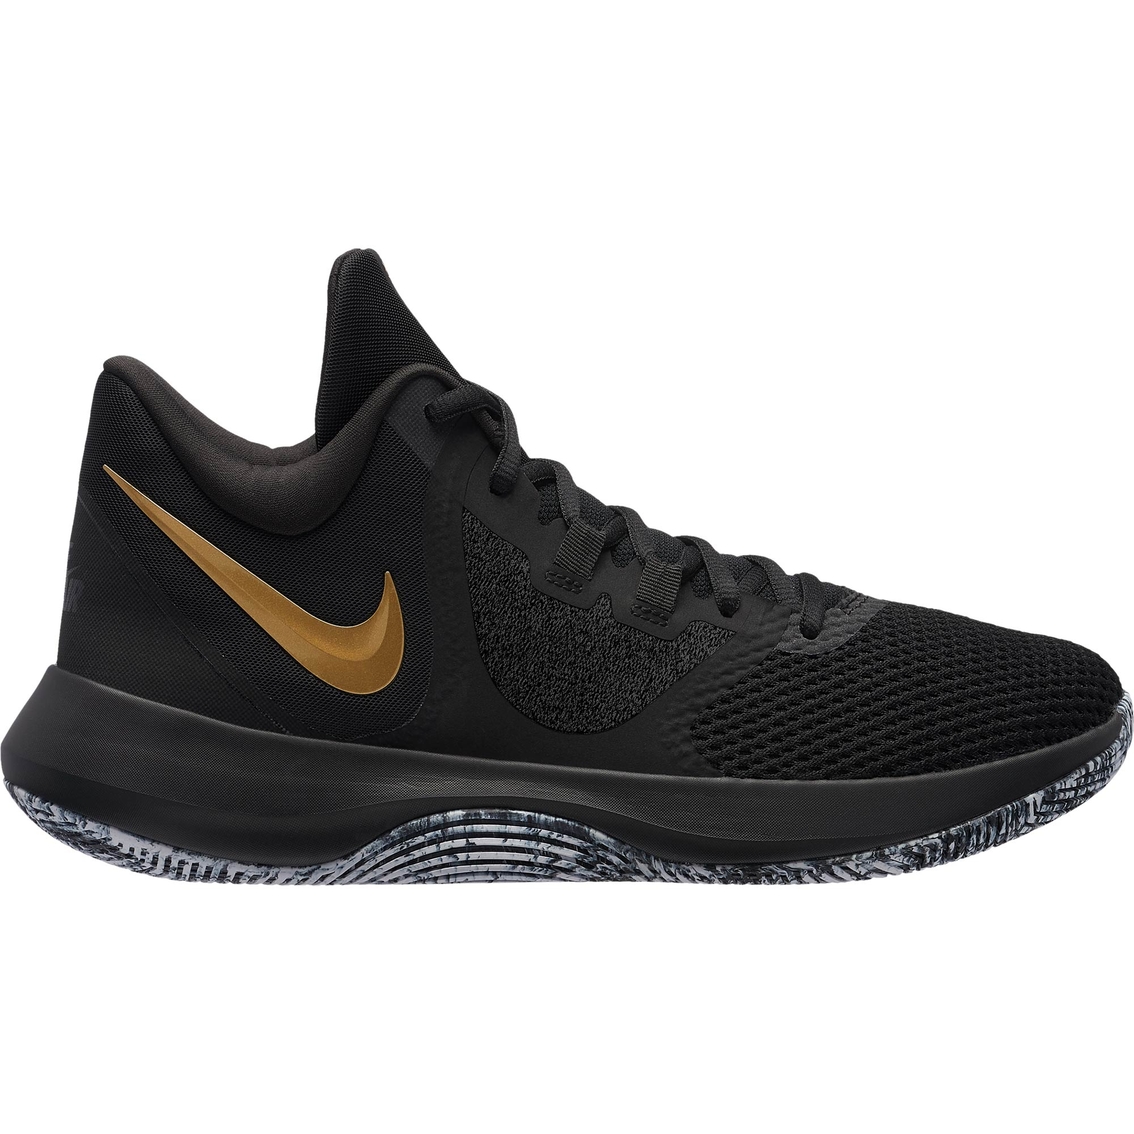 Nike Air Precision Ii Basketball Shoes | Basketball | Shoes | Shop The ...